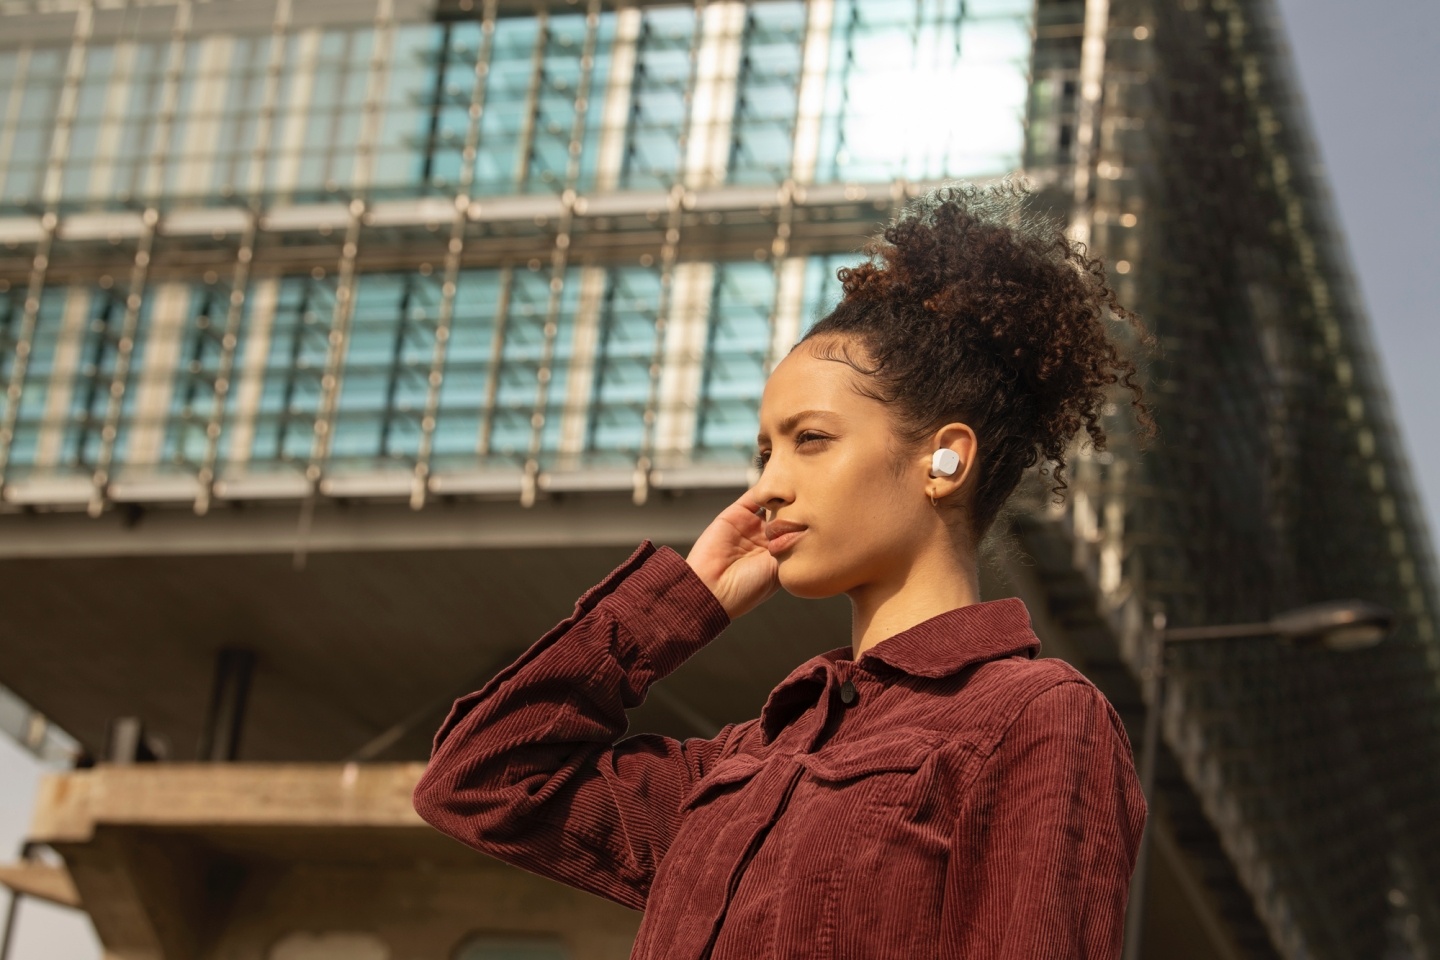 Sennheiser 推新款真無線藍牙耳機 CX True Wireless！售價新臺幣 5000 元有找，預計七月中旬上市